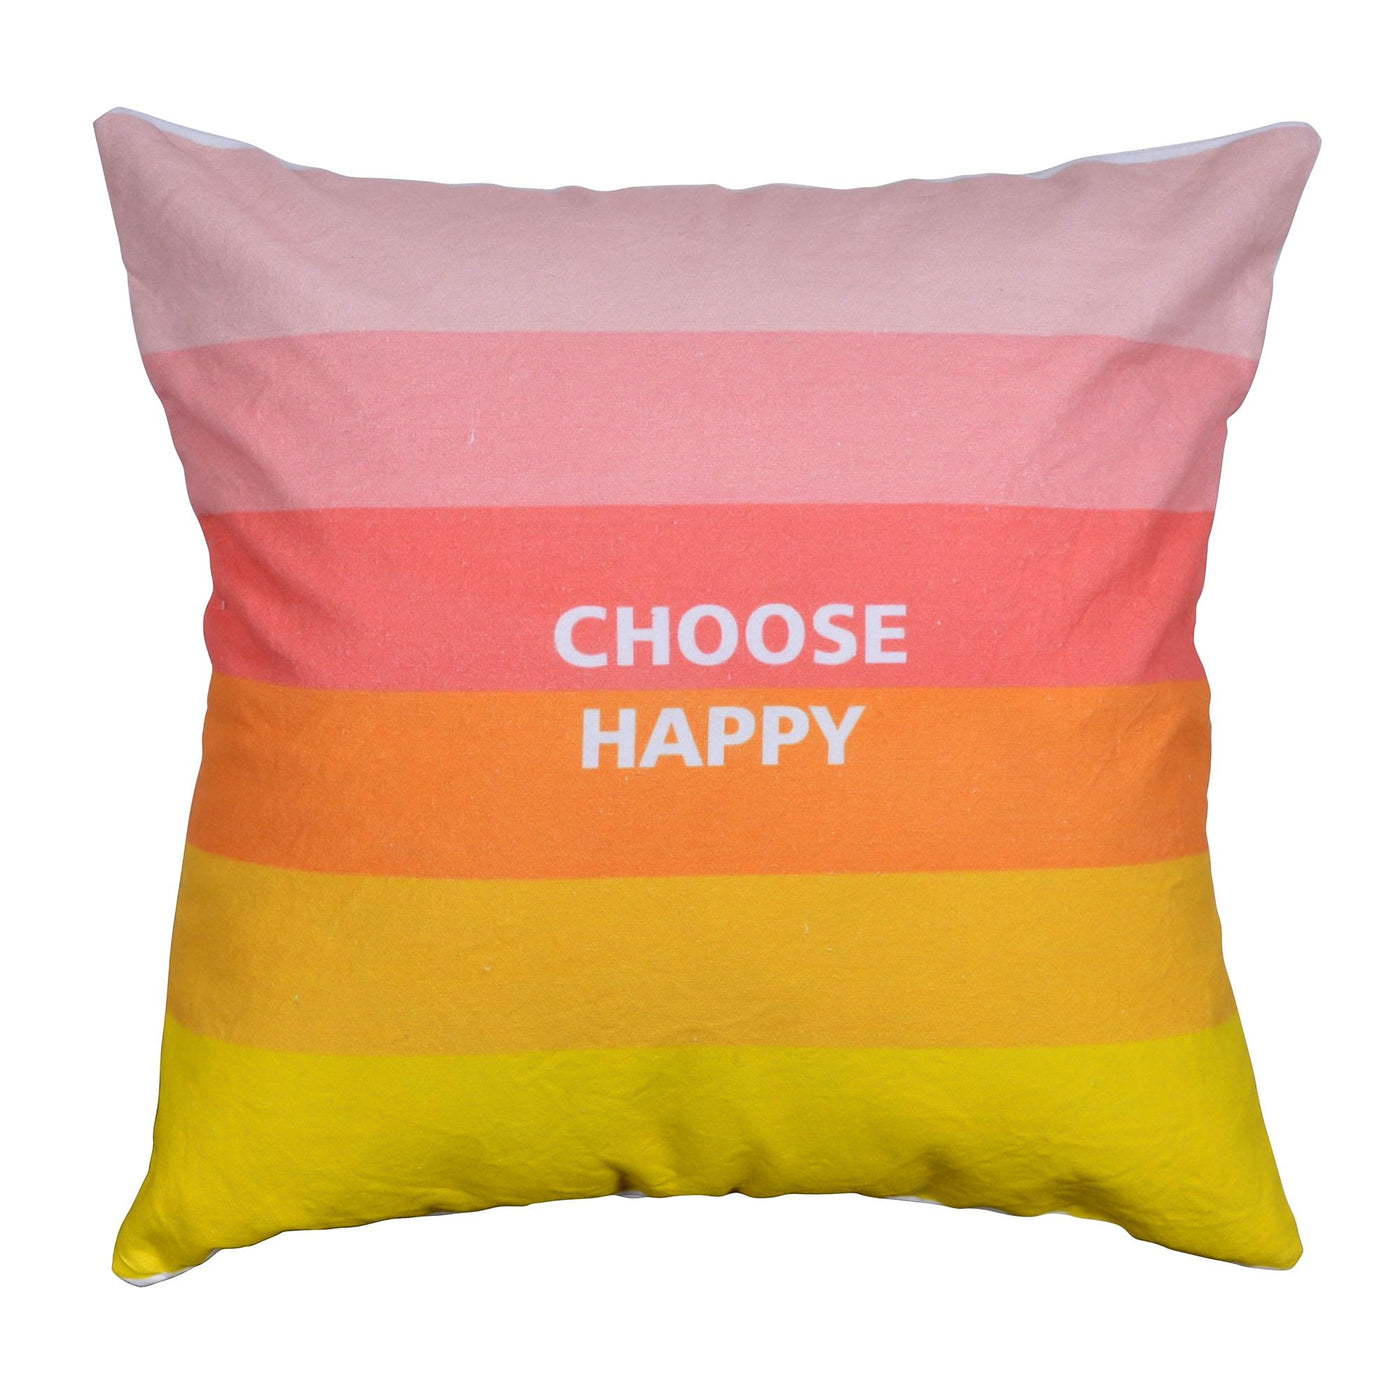 Choose Happy 16 Digital Print Cushion Cover